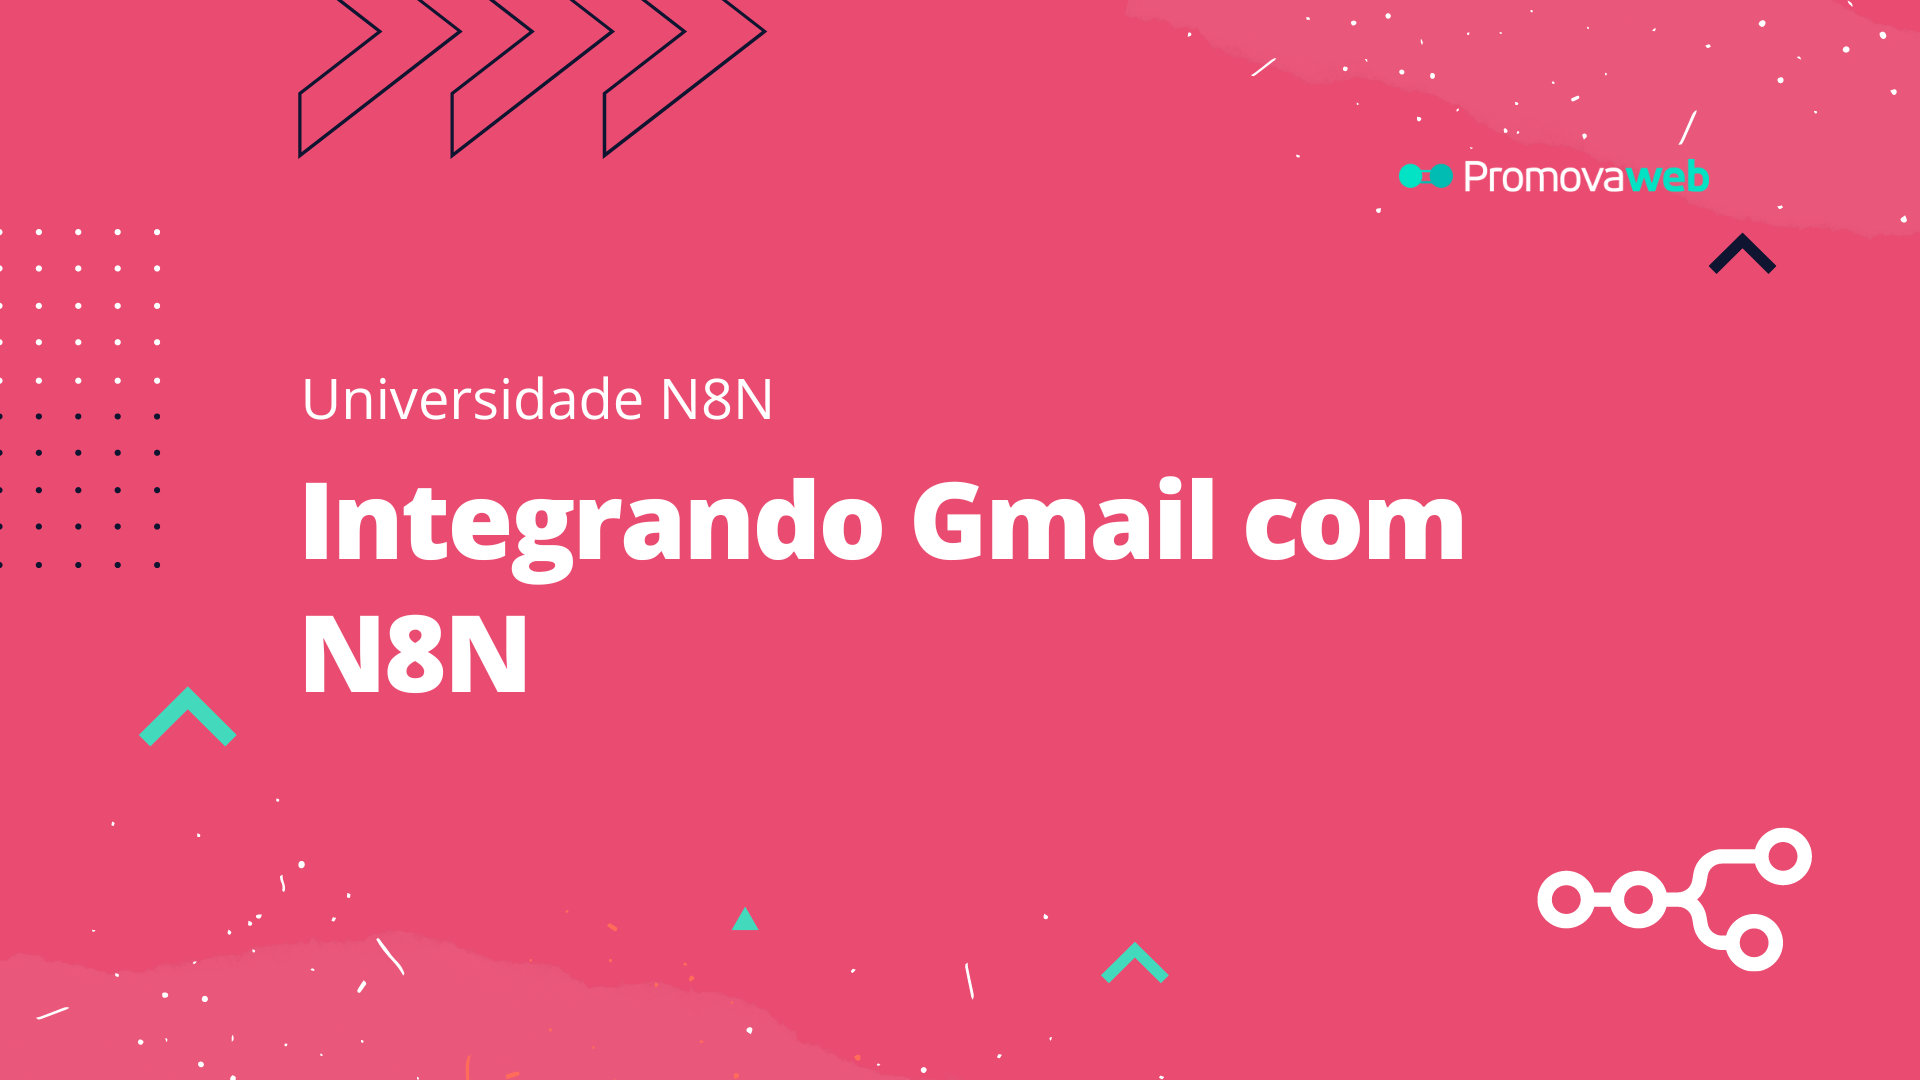 Integrando Gmail com N8N